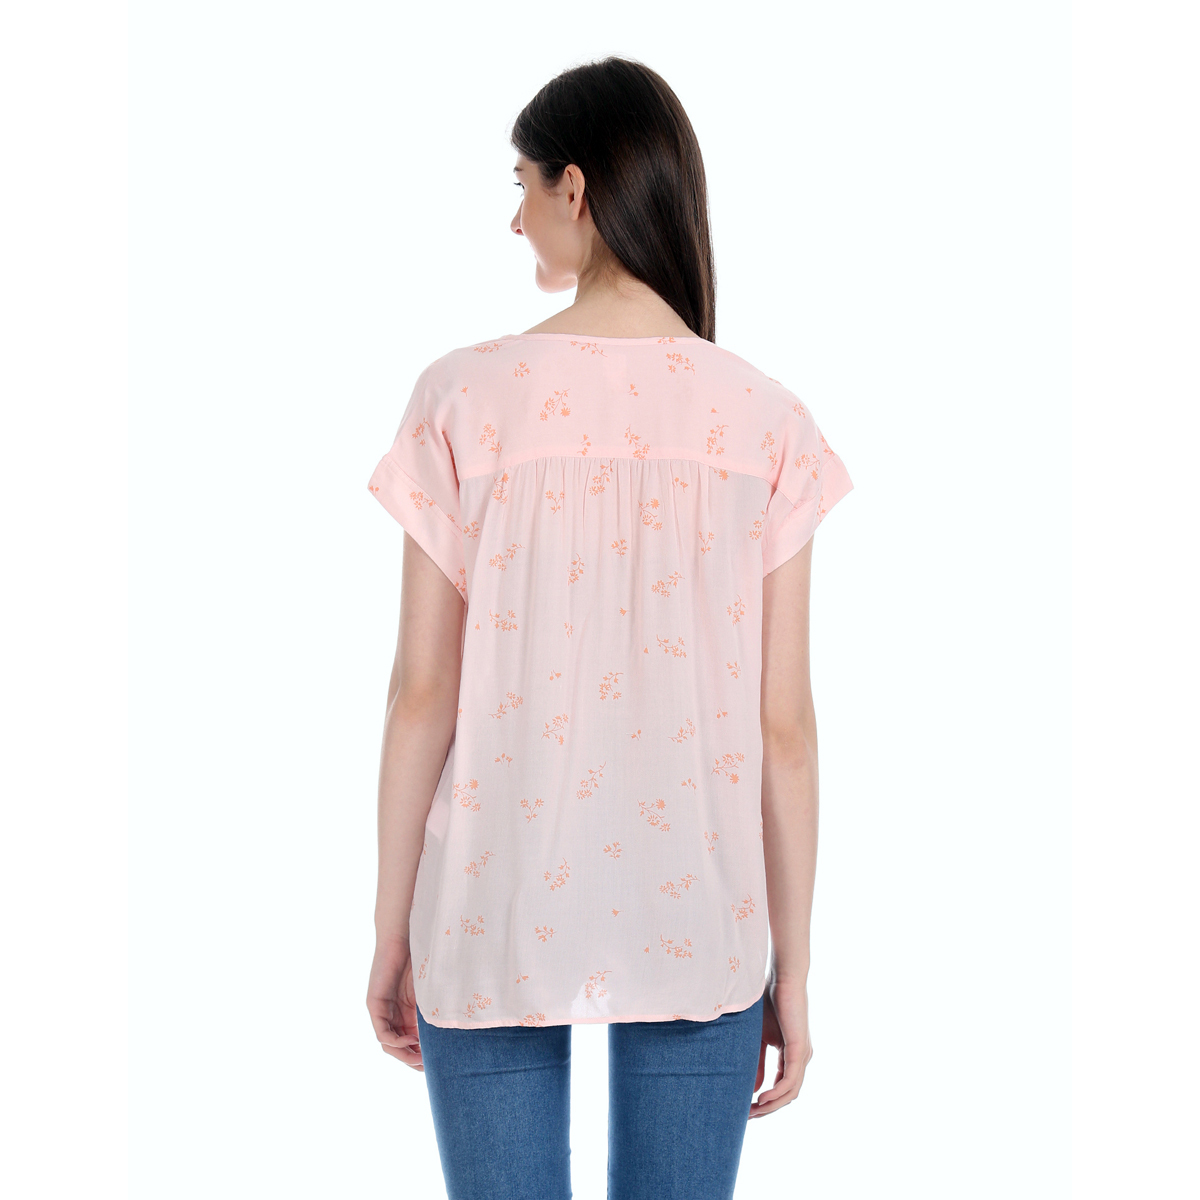 Gap Floral Printed Notch Round Neck Top Styled with Raglan Sleeves & High-Low Hem - Pink